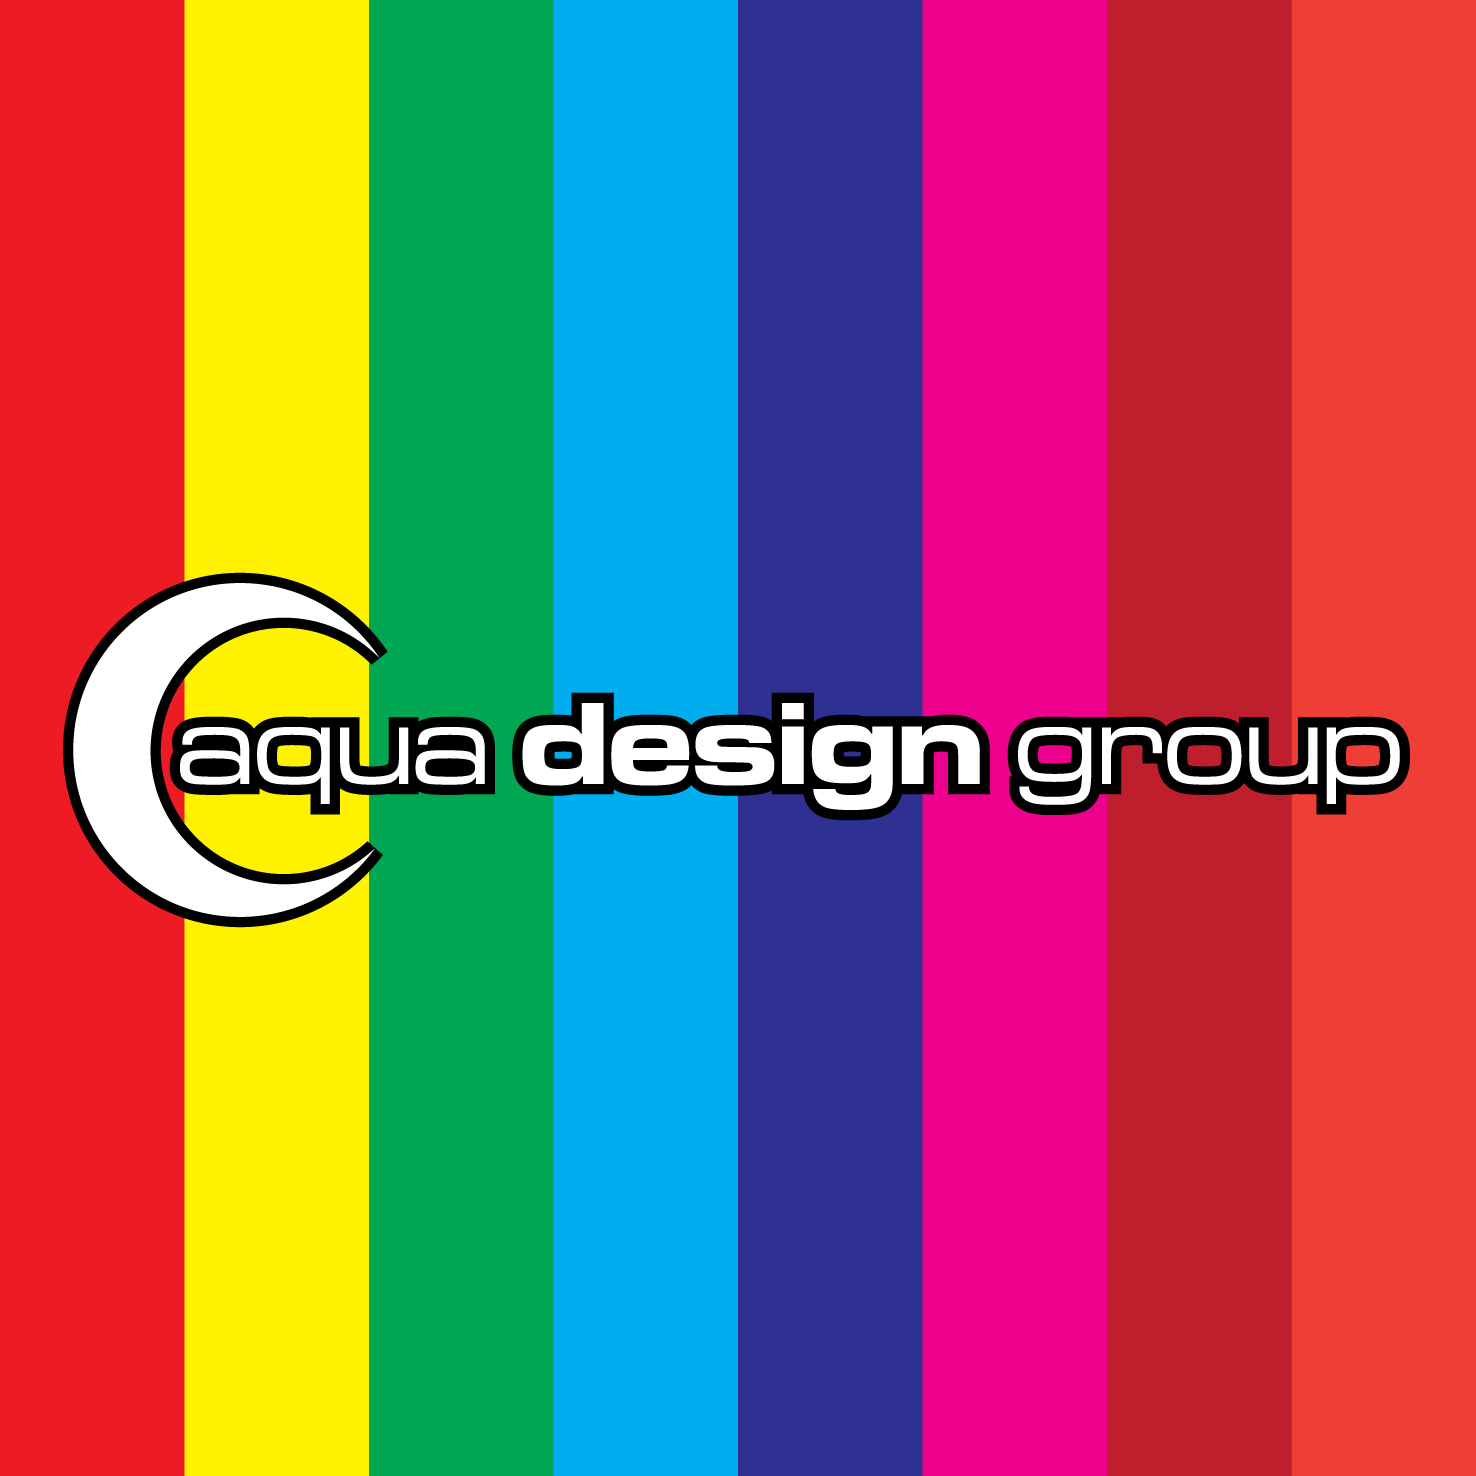 rainbow-square-logo